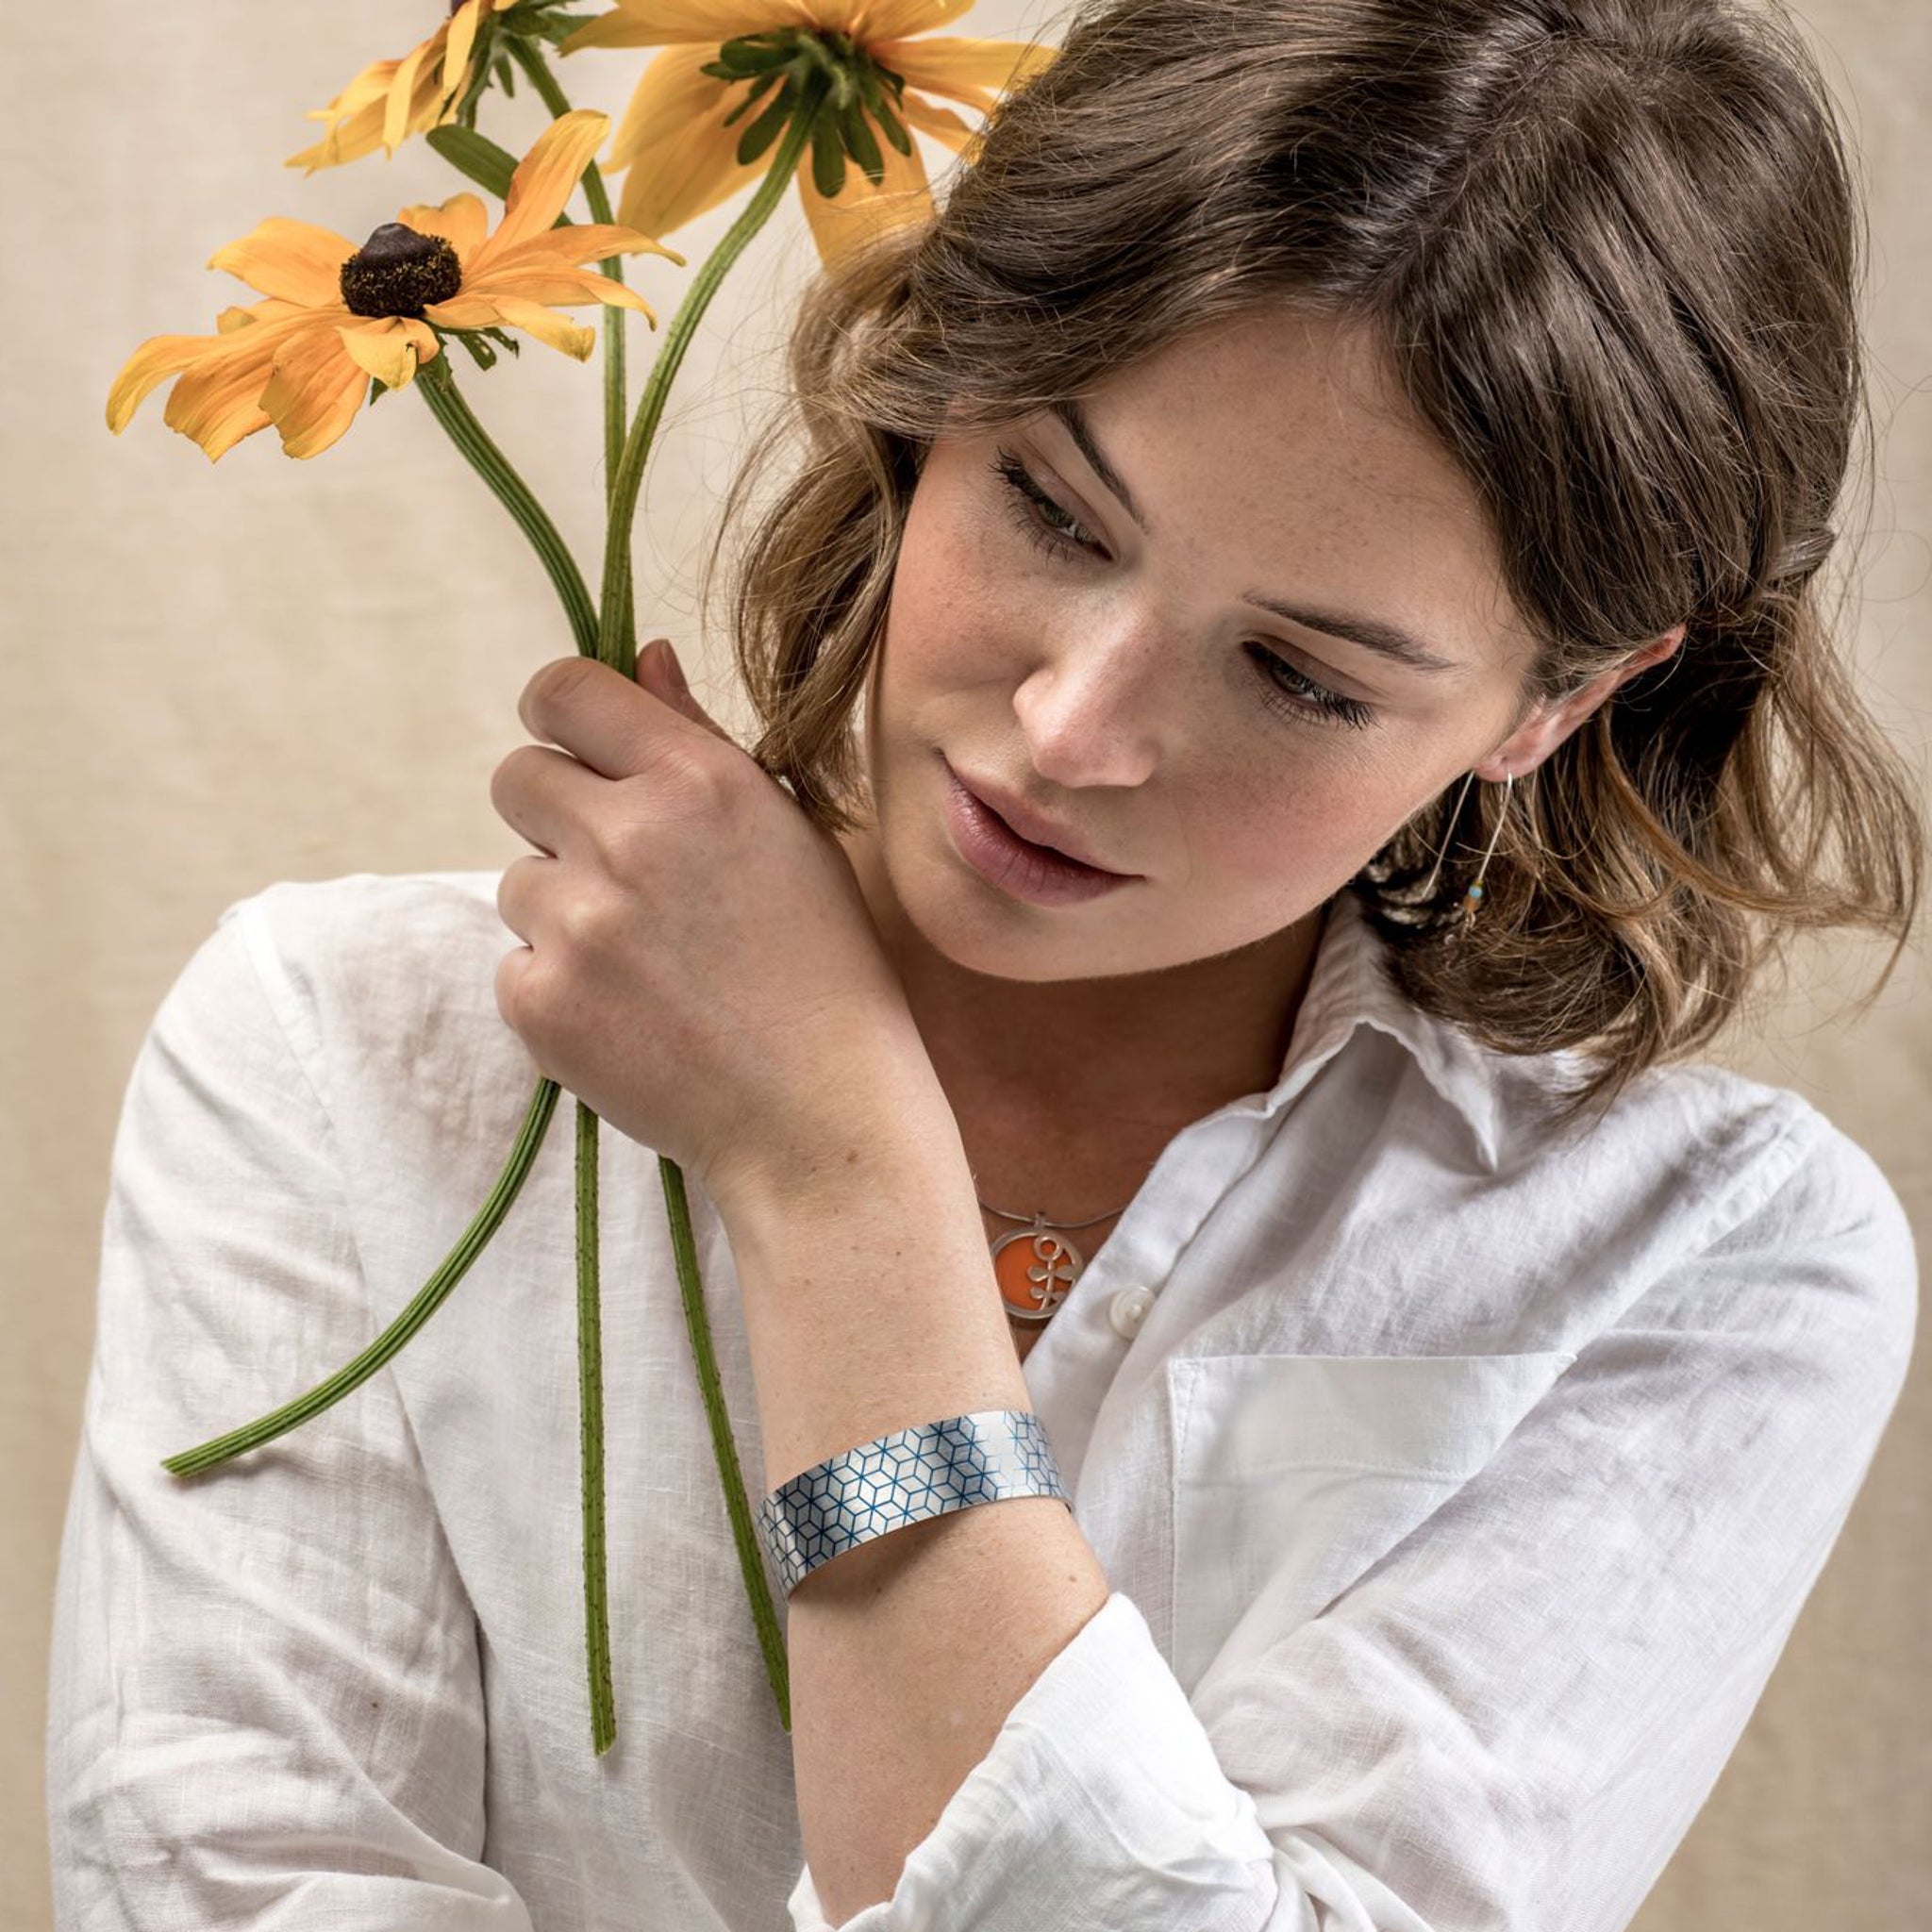 Fashion model wearing an intricate cuff bracelet with a geometric pattern.